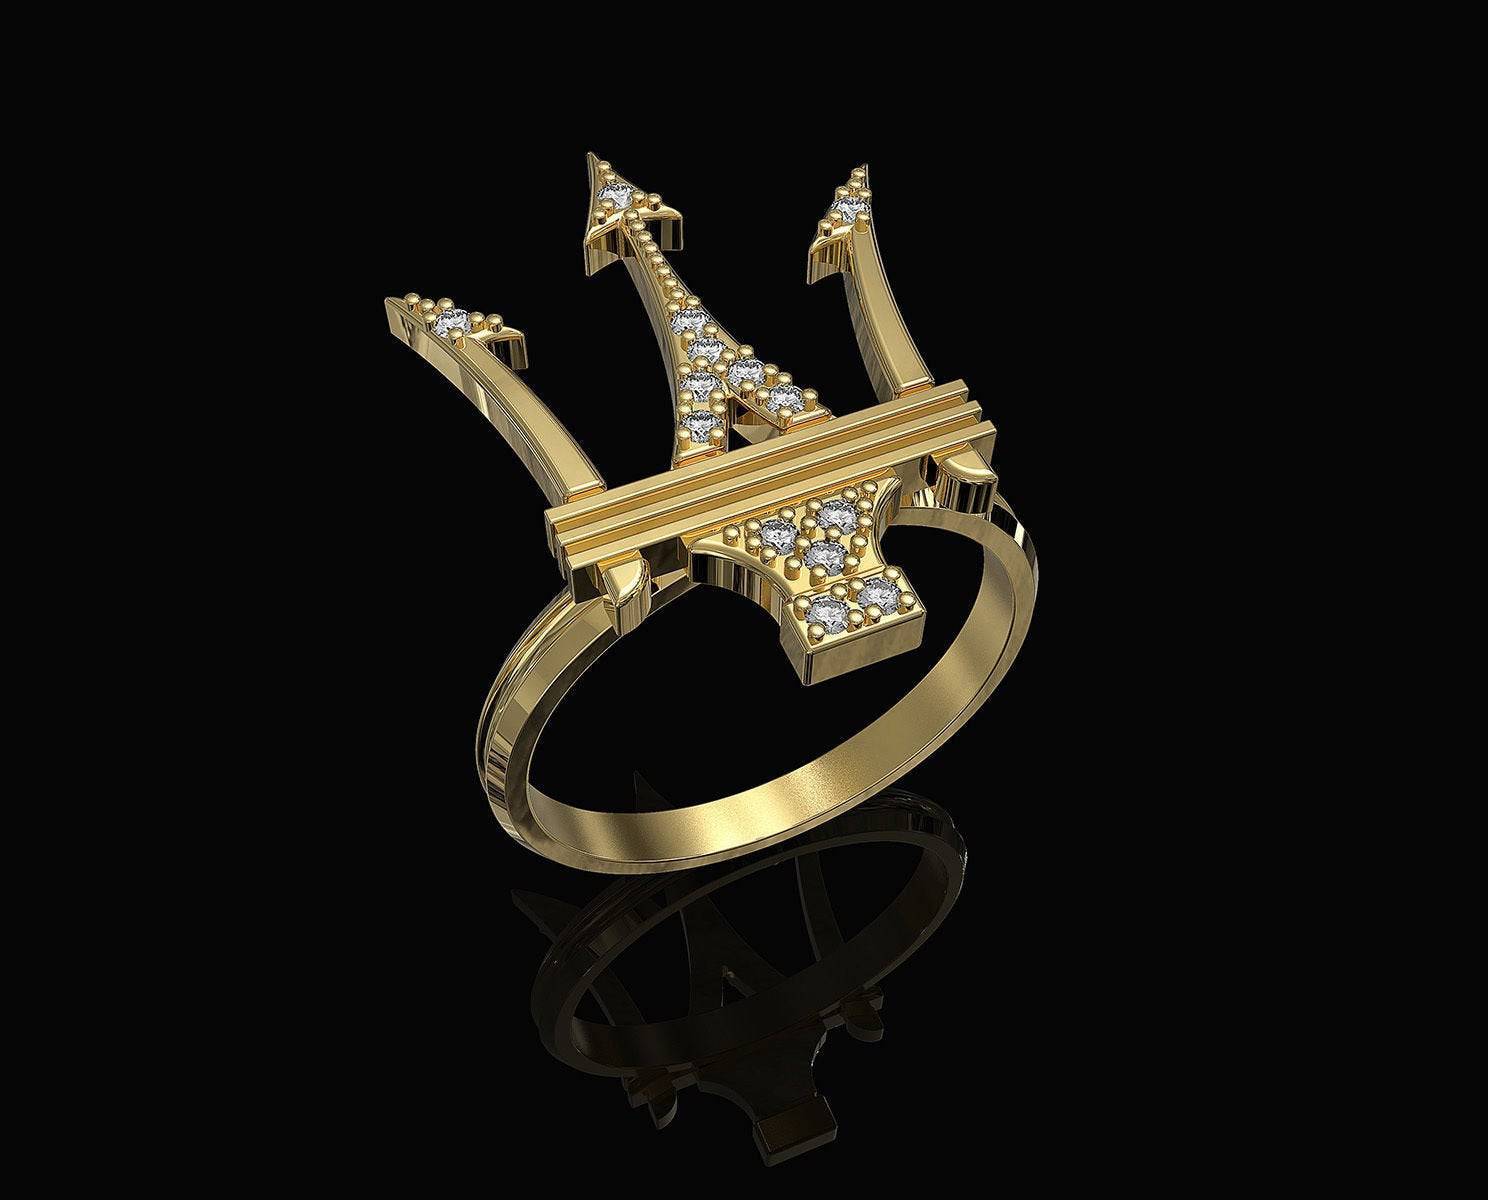 Buy 22Kt Gold Zamindhari Men God Ring 94VH2647 Online from Vaibhav Jewellers